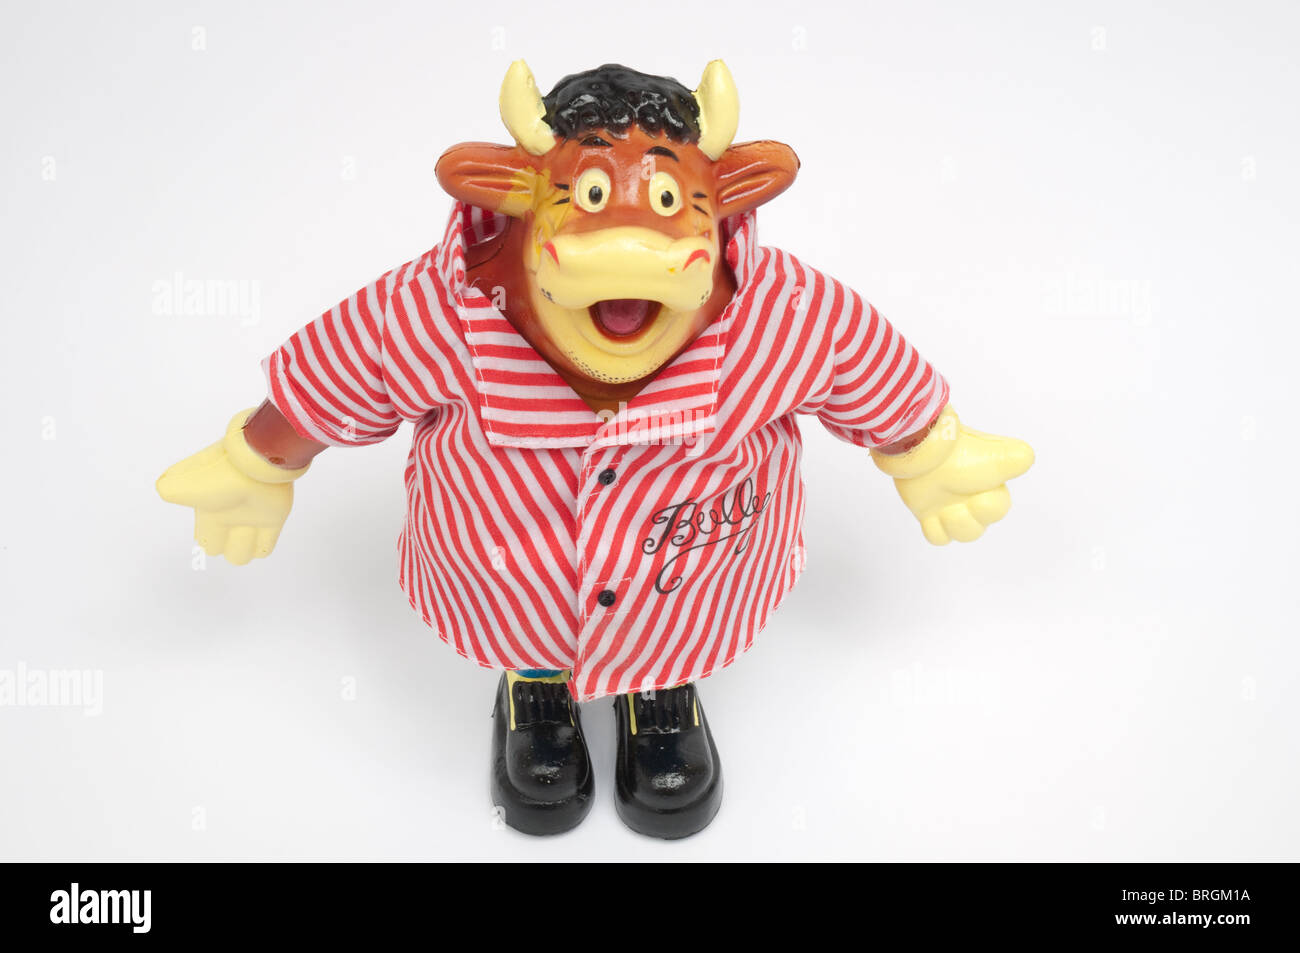 Bendy Bully toy, mascot of the Bullseye TV programme. Stock Photo